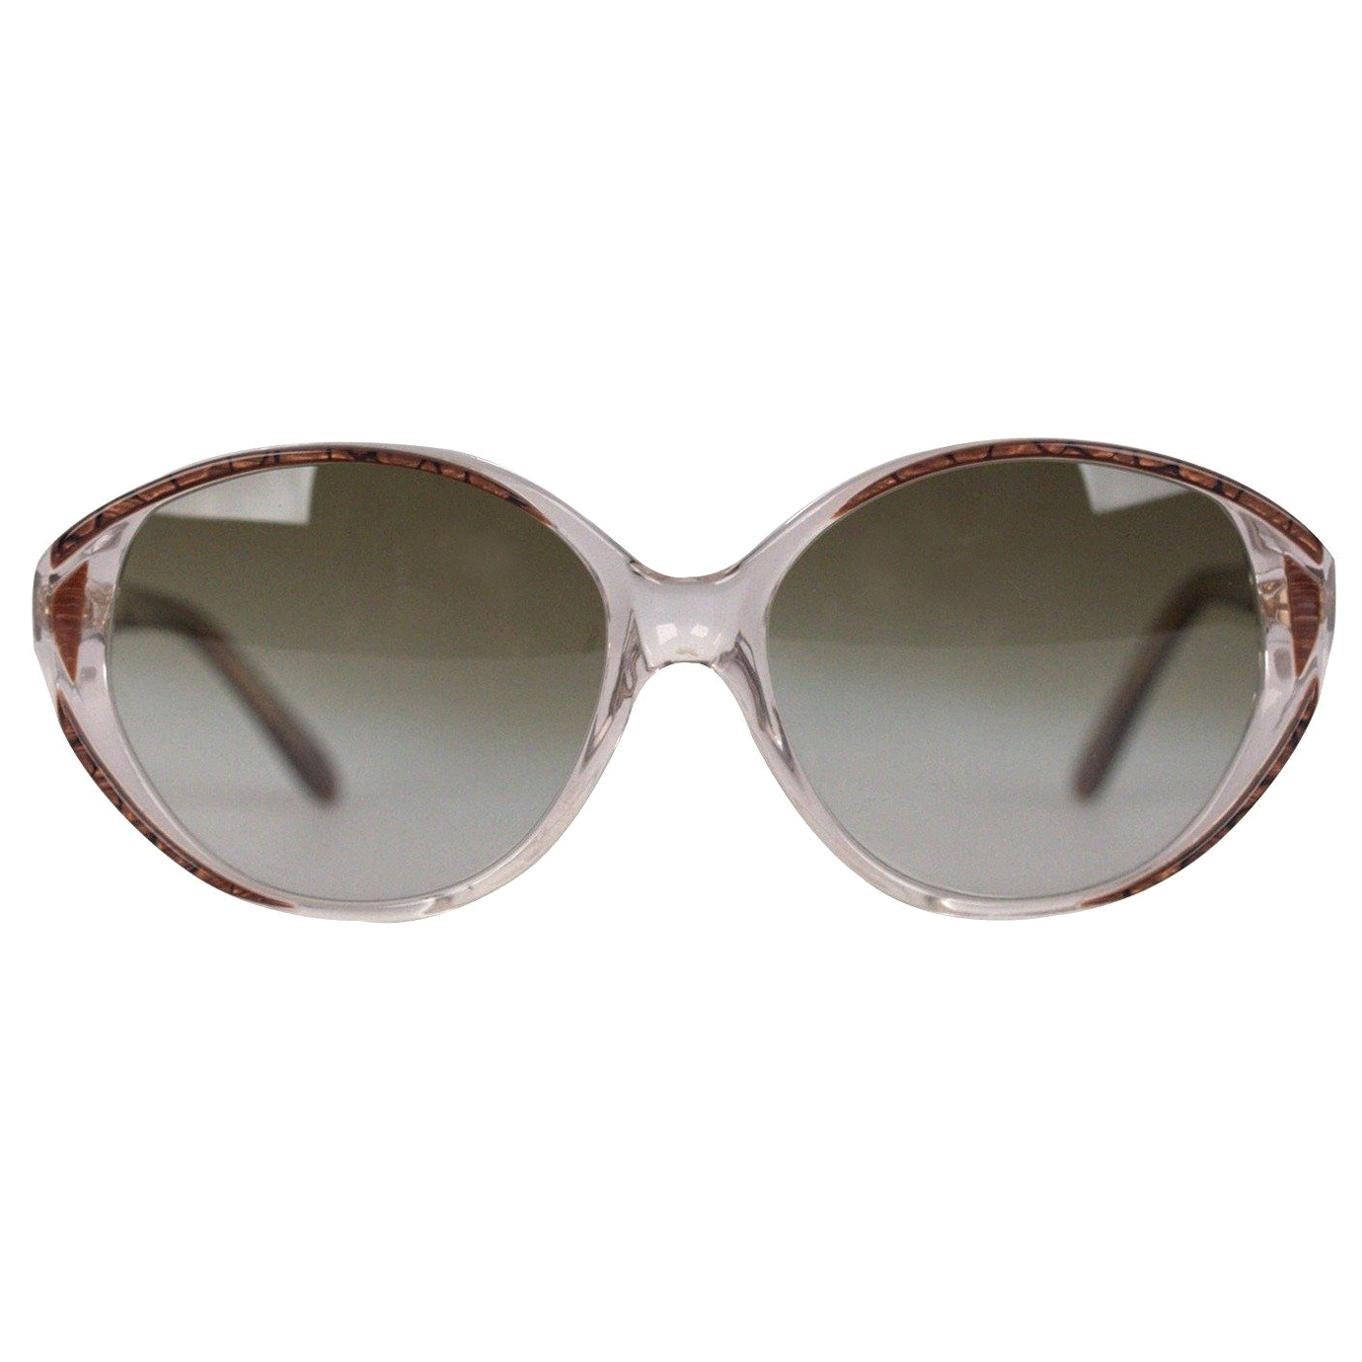 Yves Saint Laurent Vintage Mod. Iris Sunglasses 52/14 125 New Old Stock